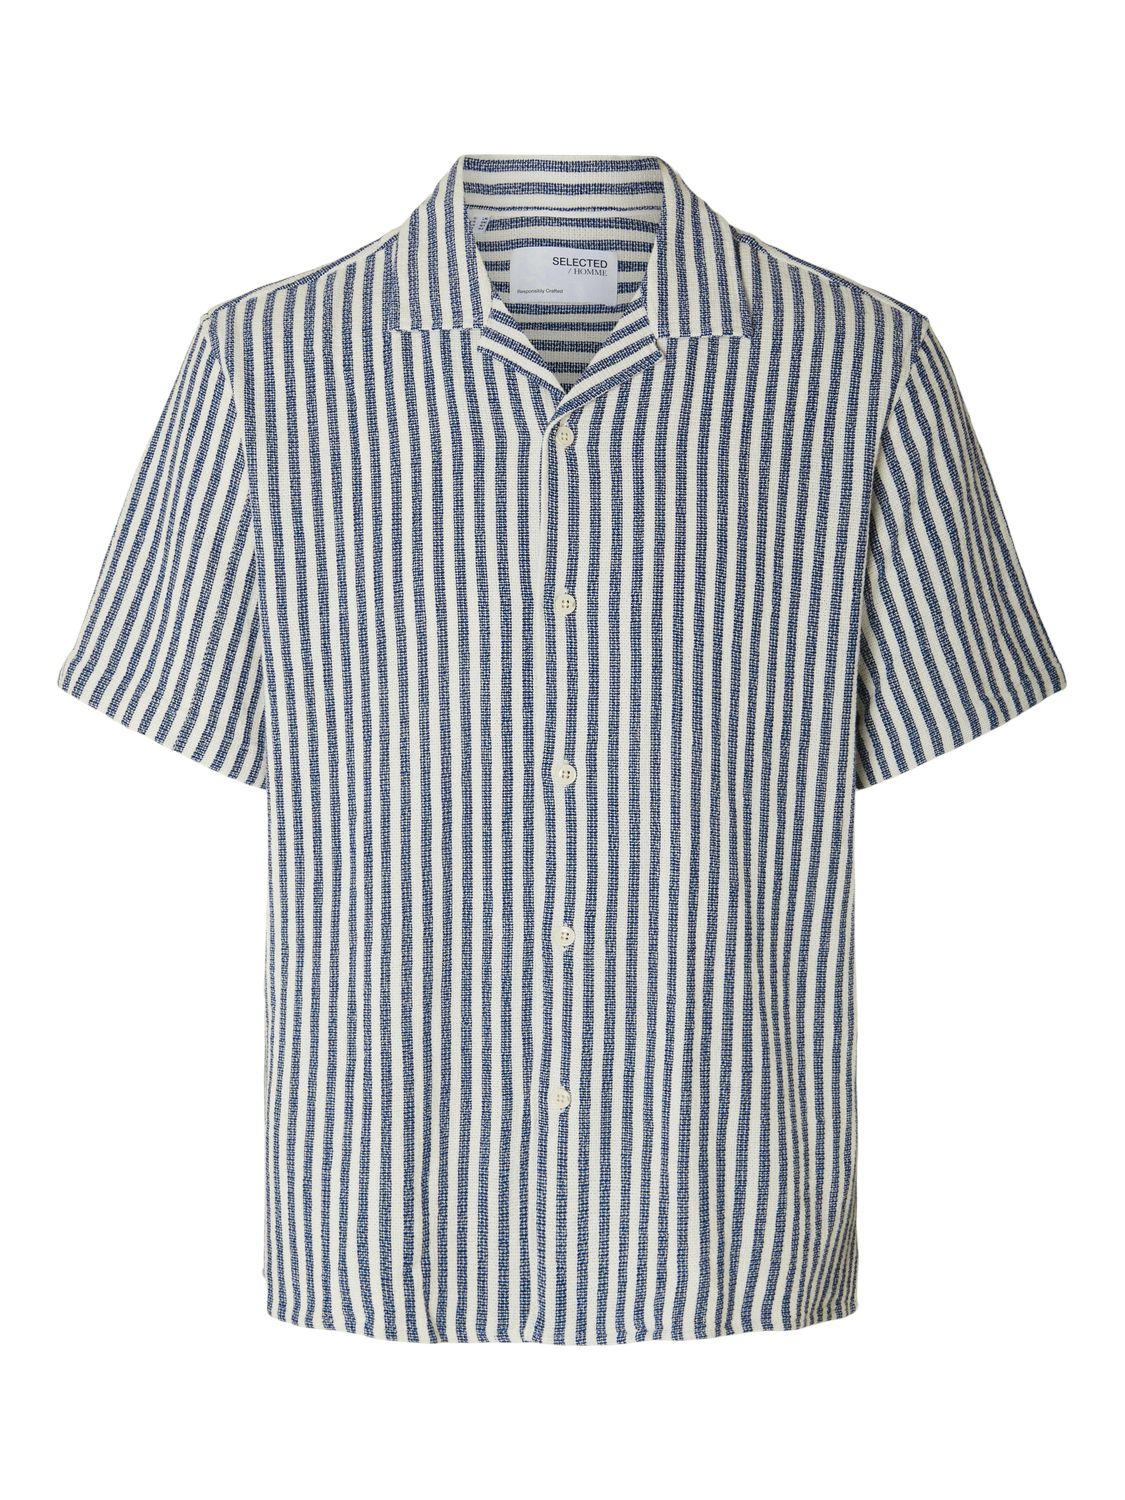 SELECTED HOMME Stripe Short Sleeve Shirt, Dark Sapphire, S